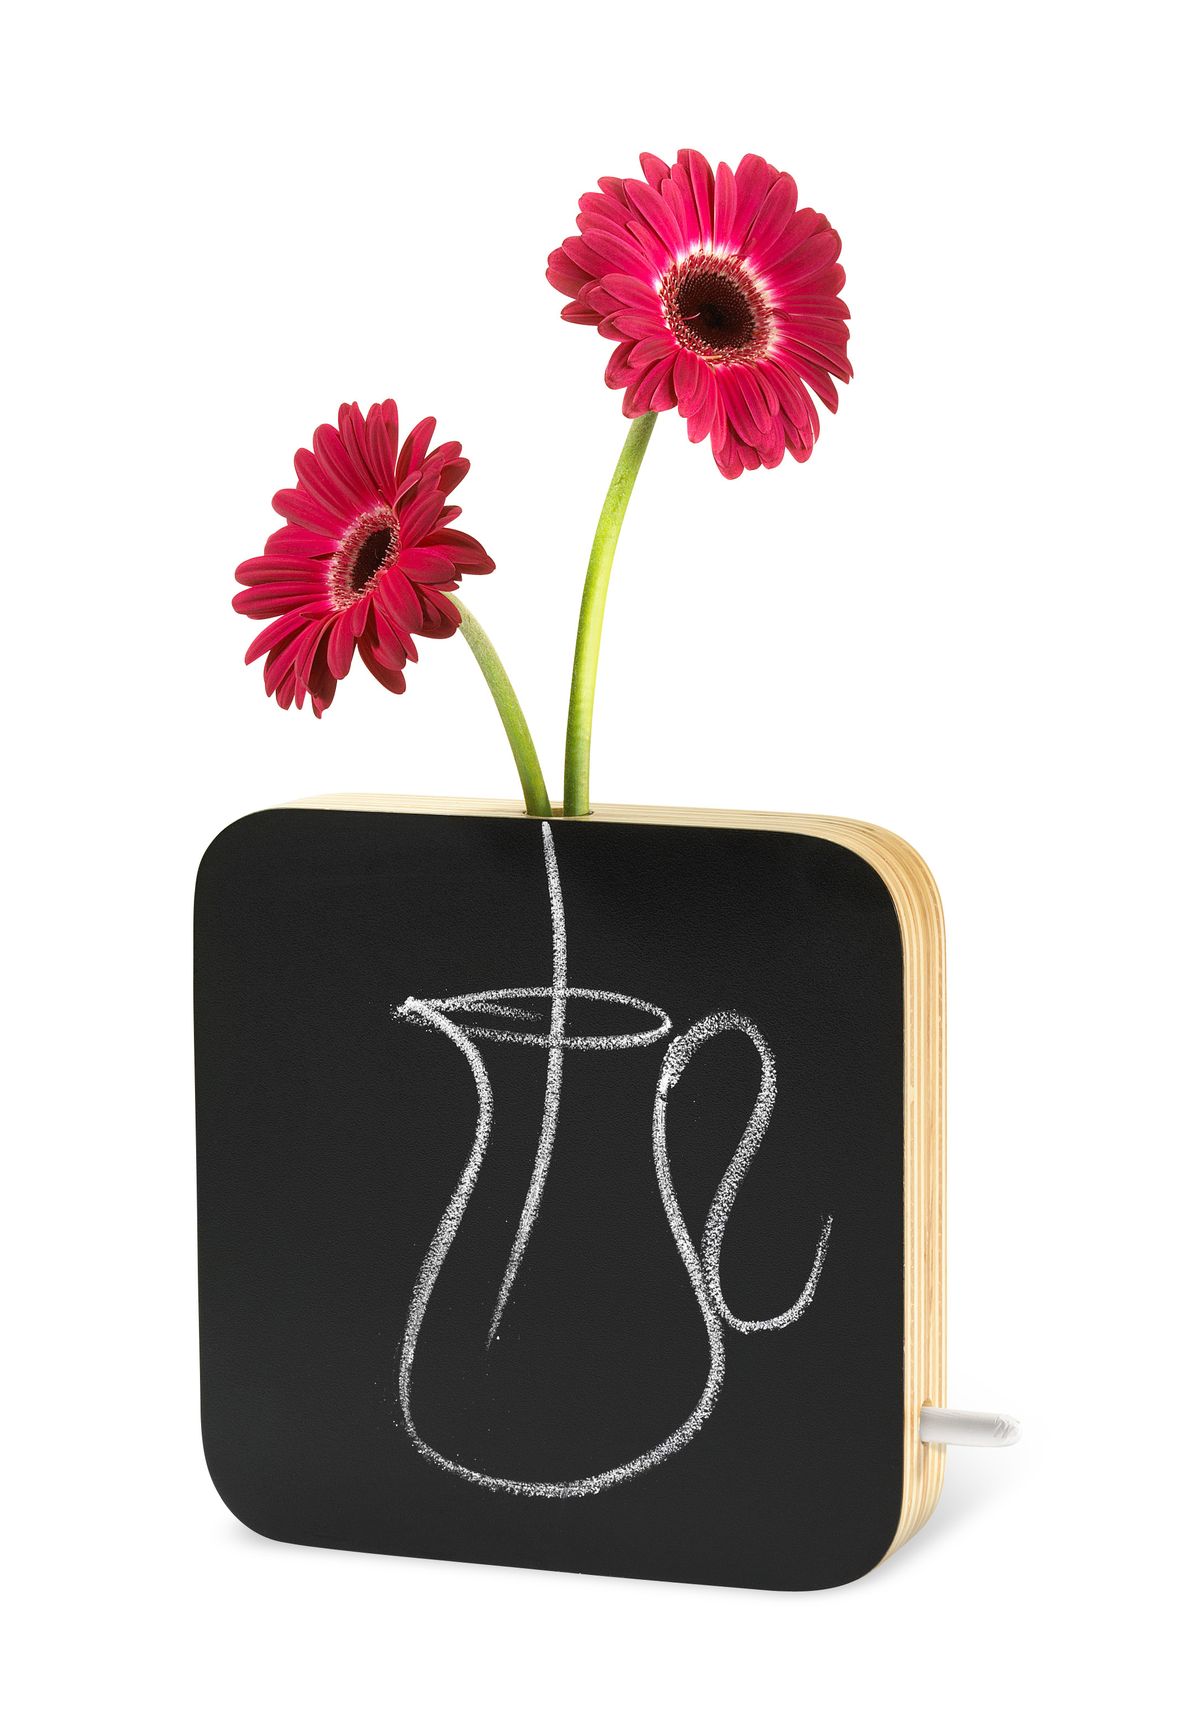 MoMA Design Store’s playful Chalkboard Vase by designer Ricardo Saint-Clair.